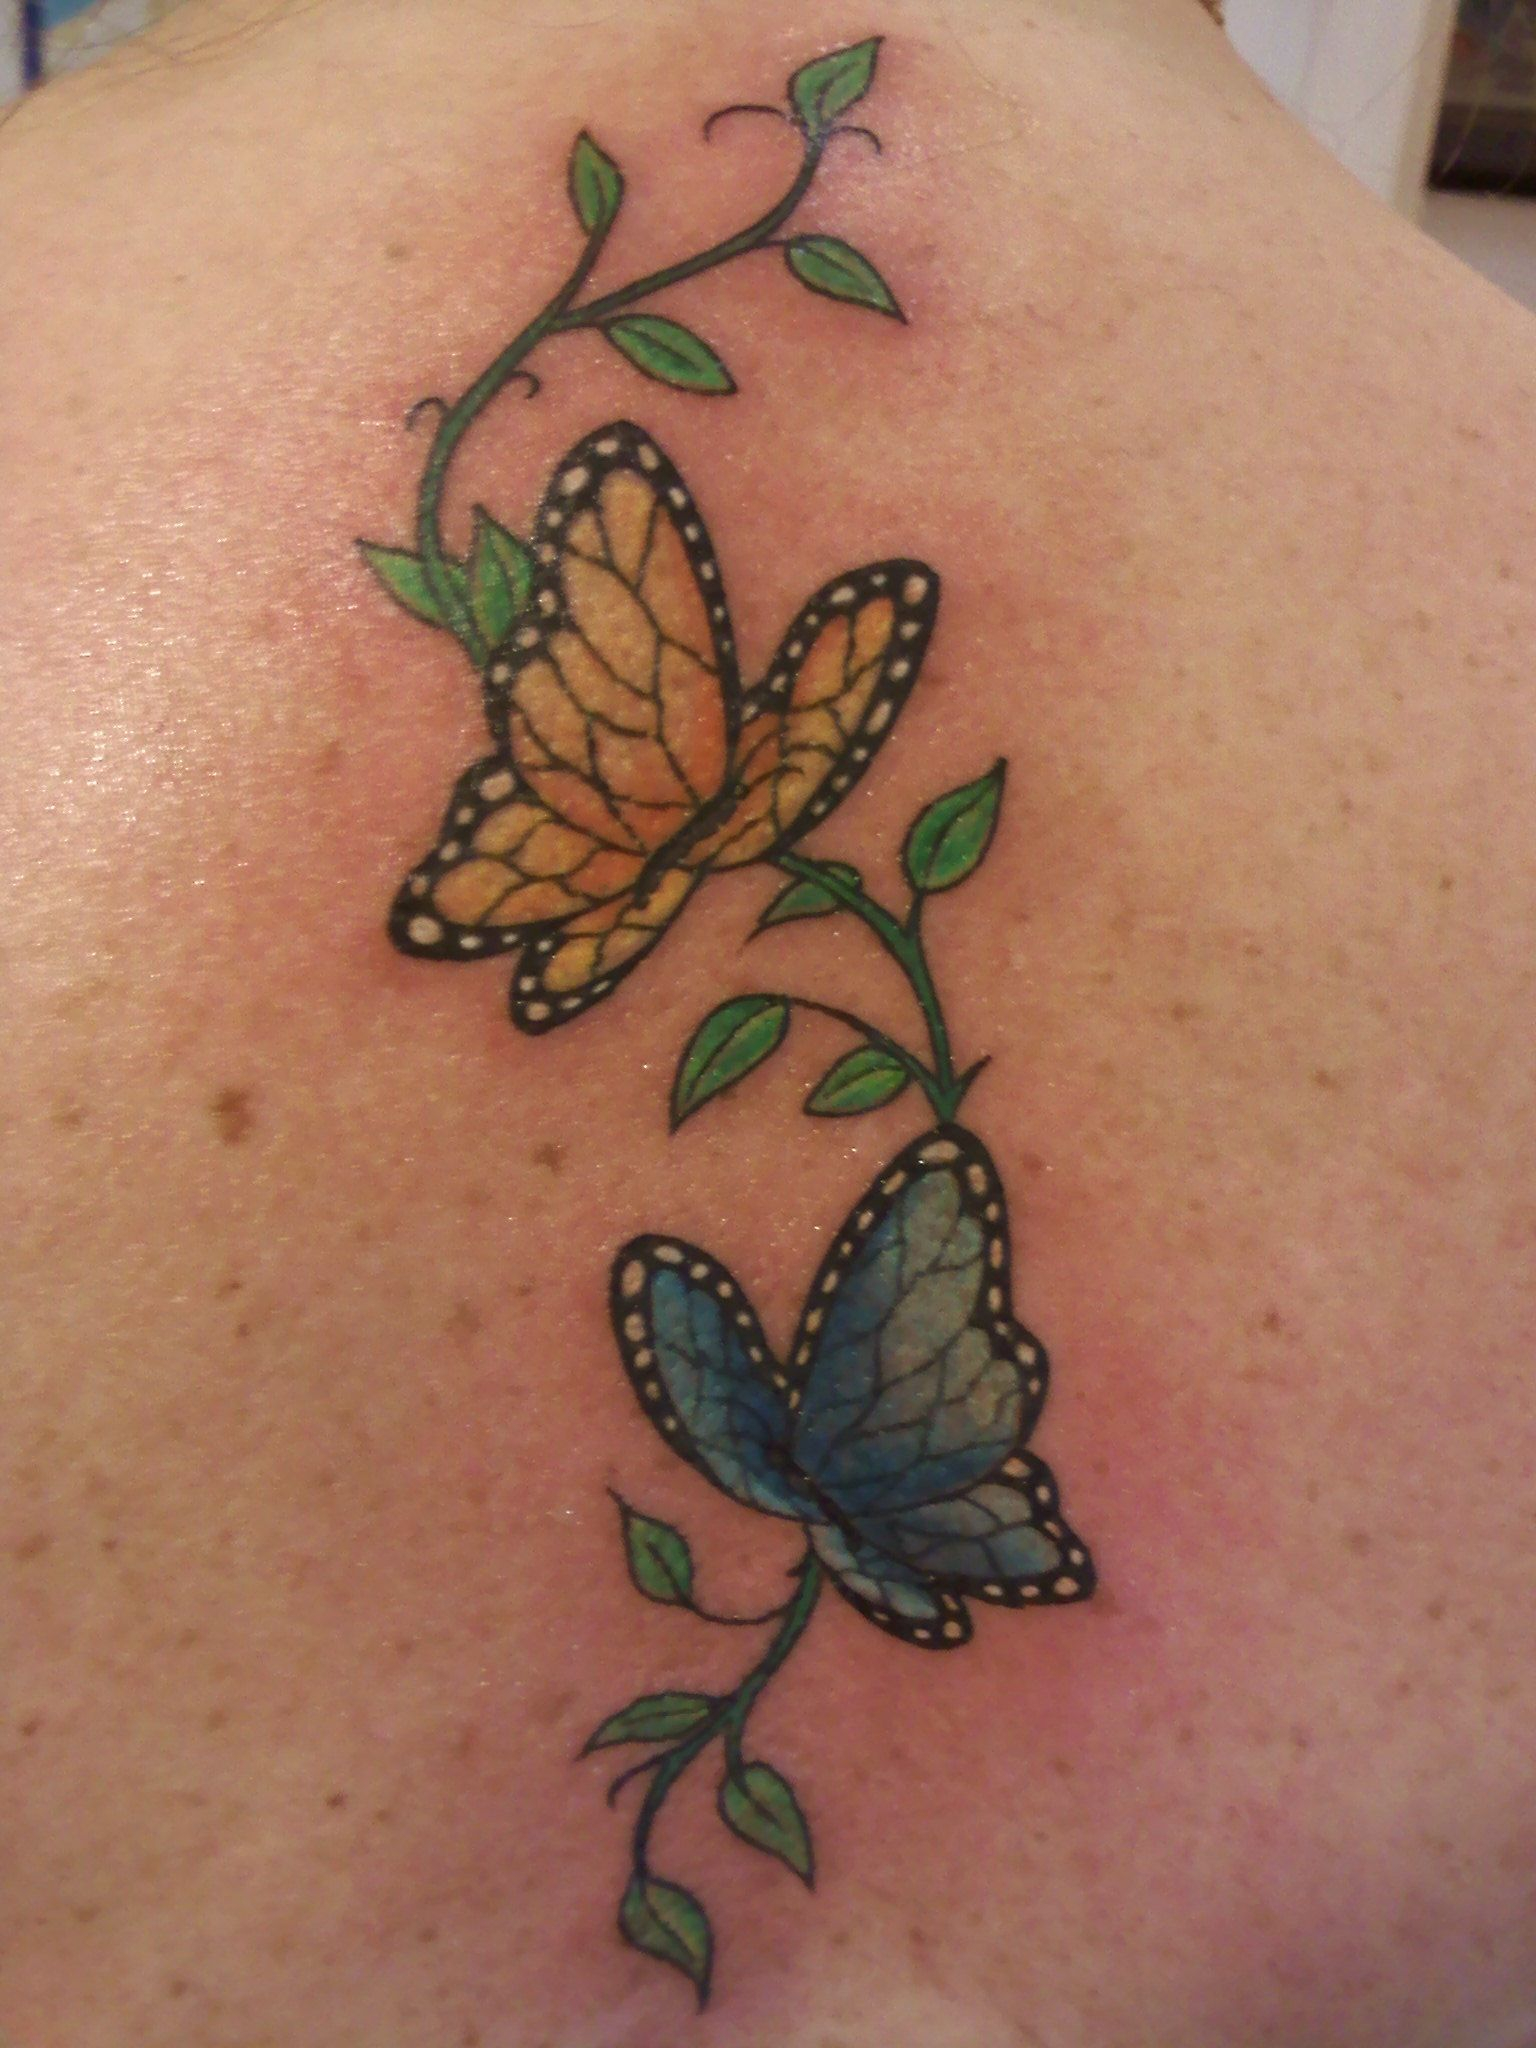 My Gemini Butterfly Tattoo Tattoos Tattoos Love Tattoos Butterfly within dimensions 1536 X 2048